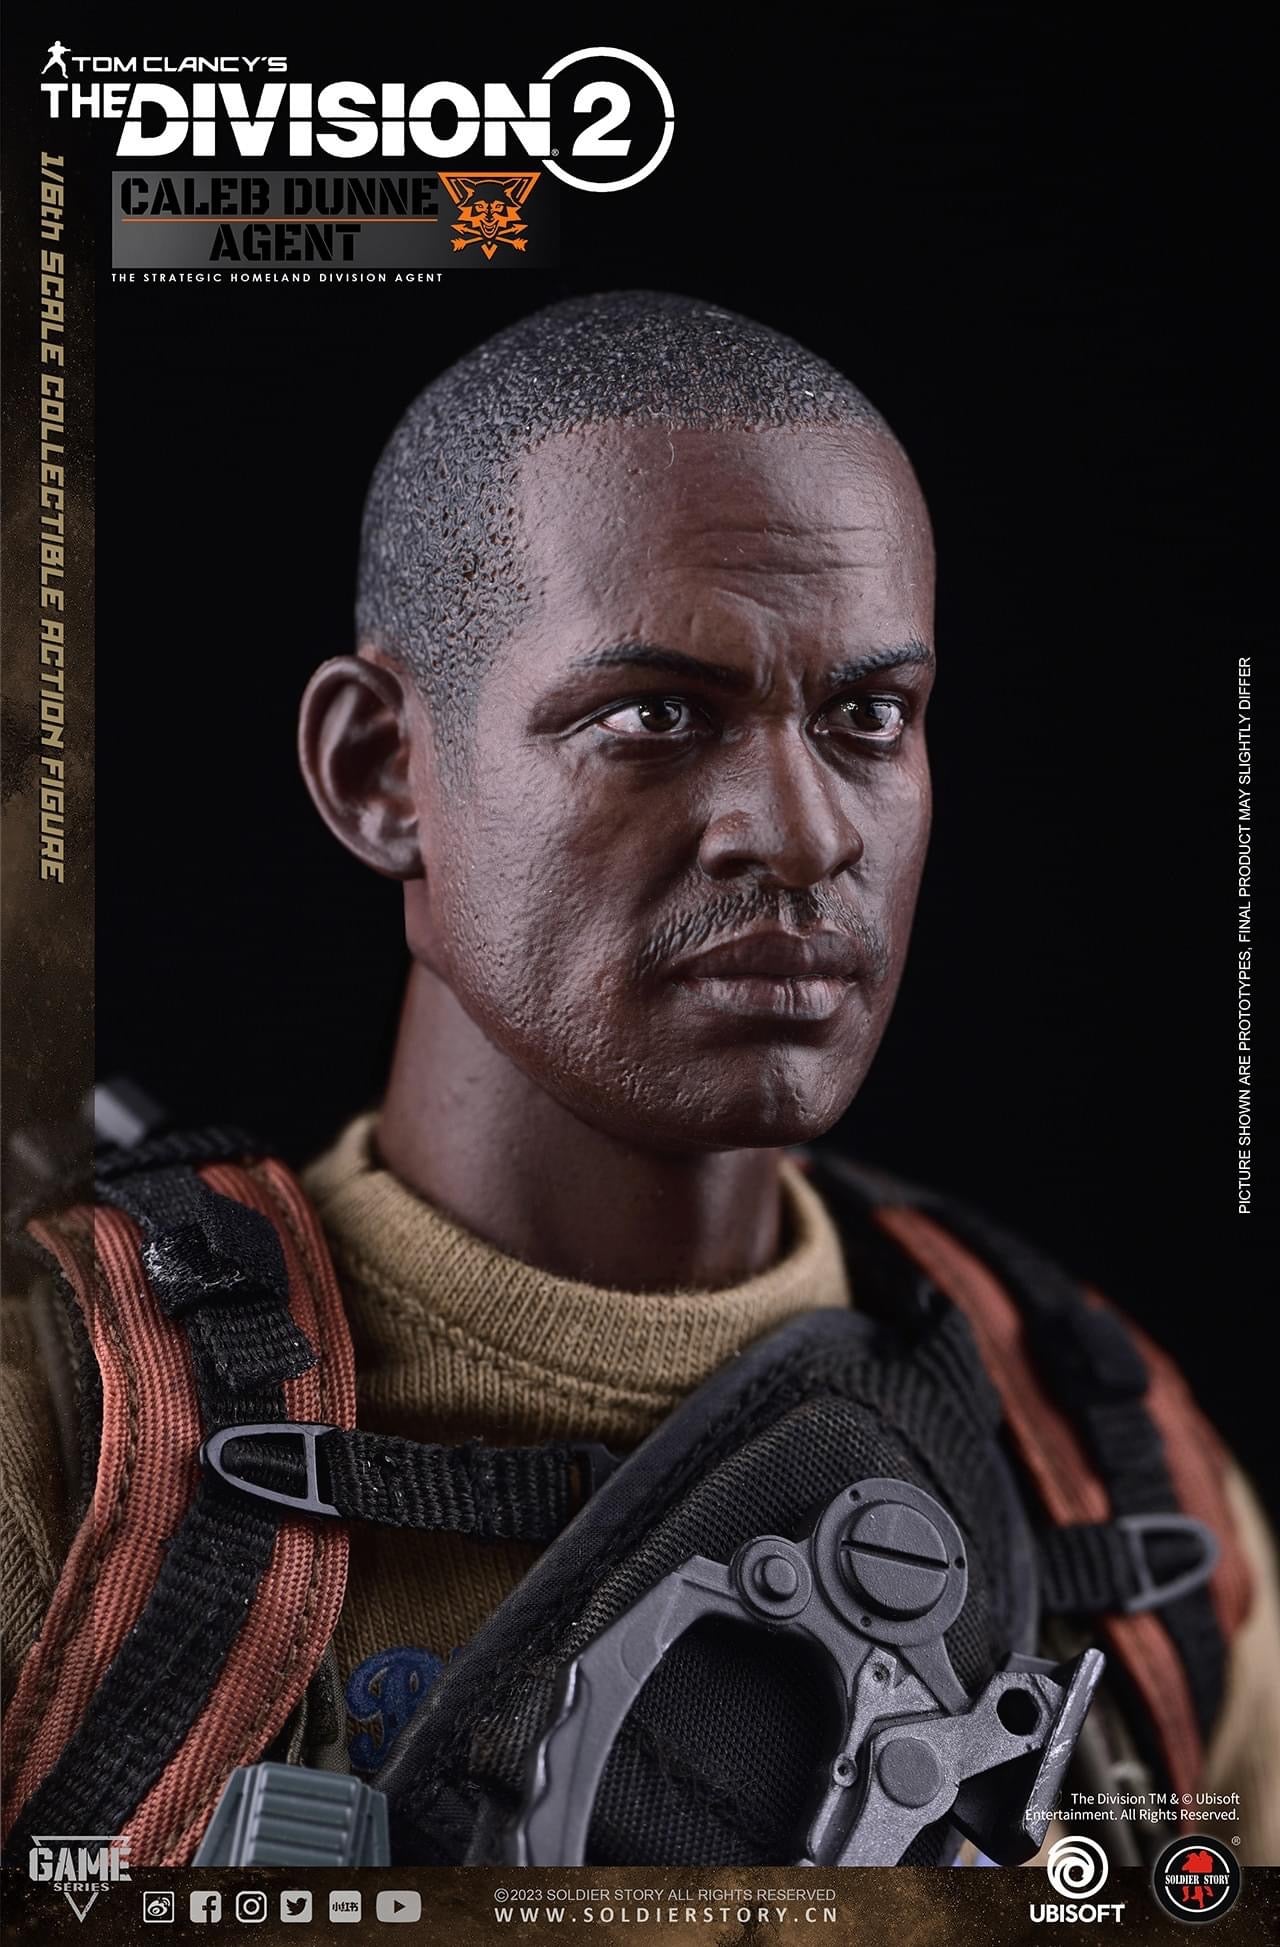 Preventa Figura Agent Caleb Dunne - Ubisoft The Division 2 marca Soldier Story SSG-008 escala 1/6